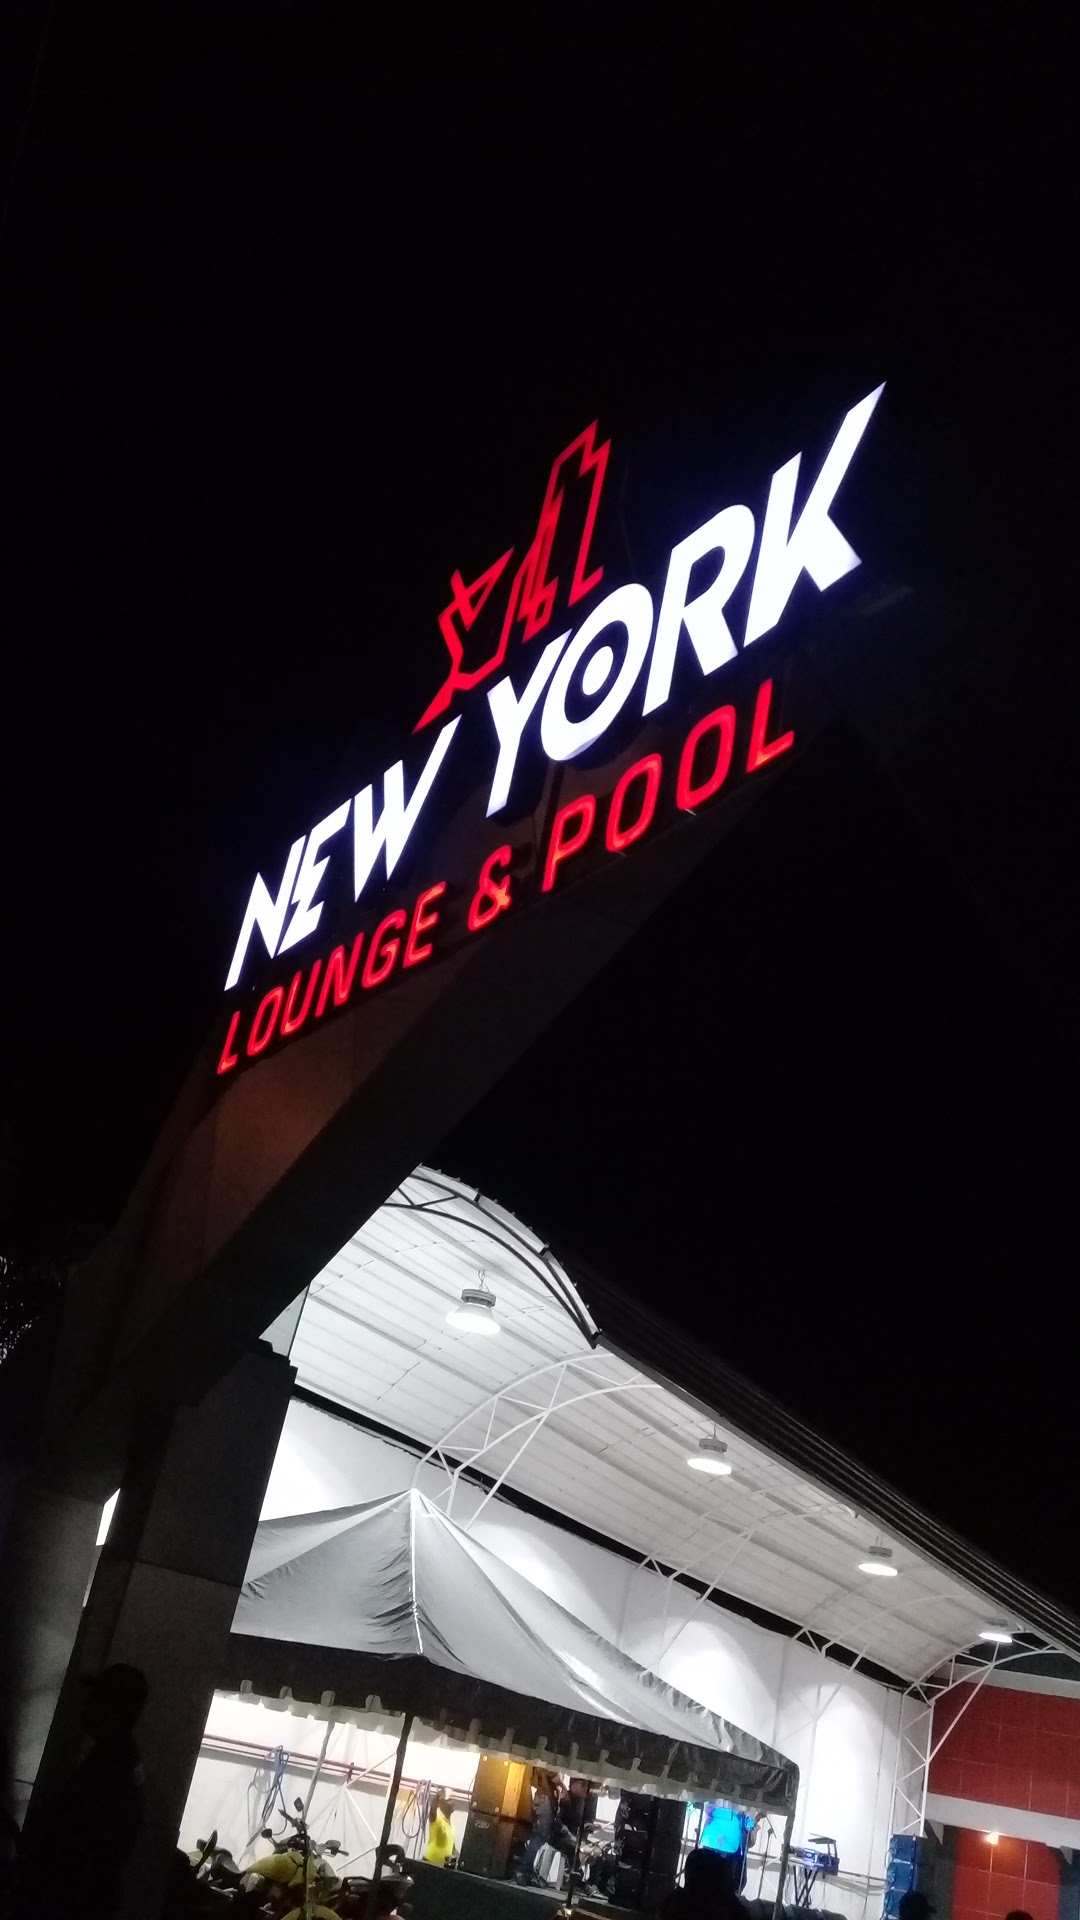 New york Lounge